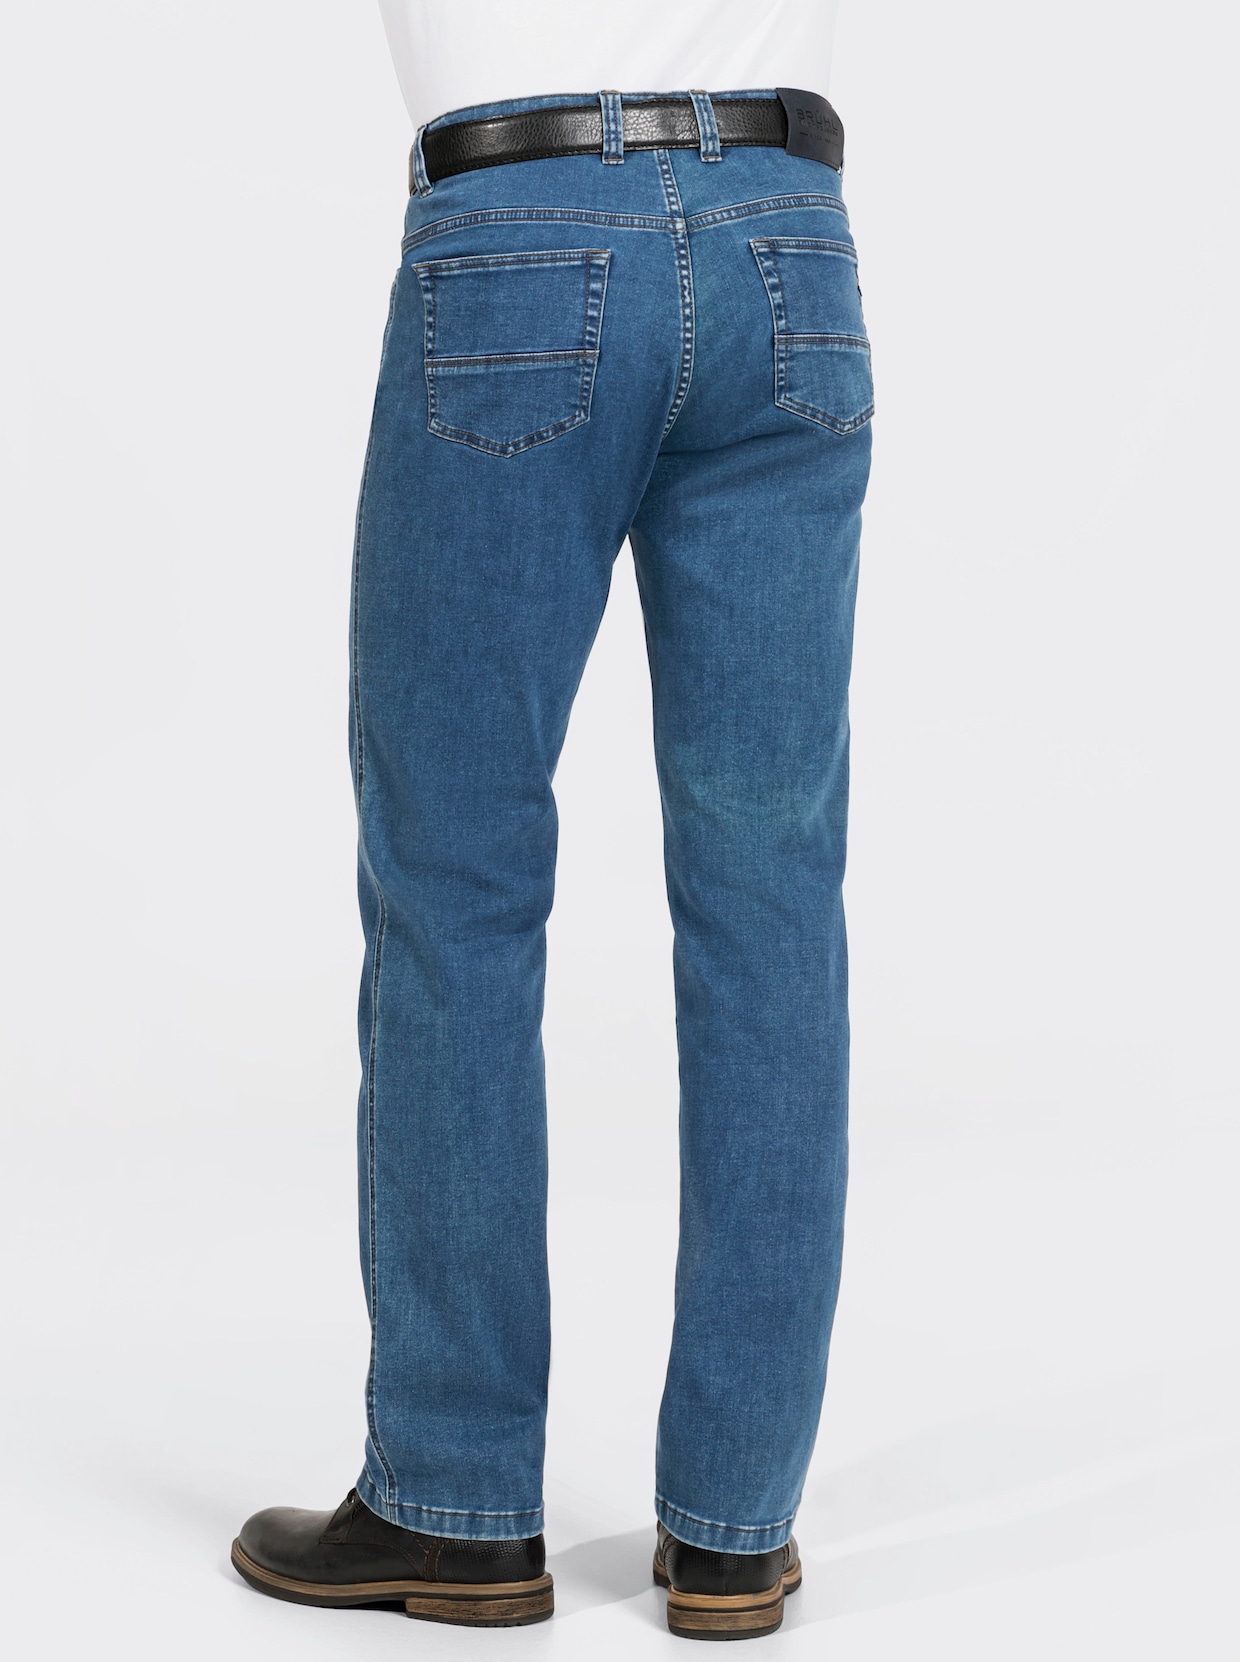 Brühl Jeans - light blue-denim